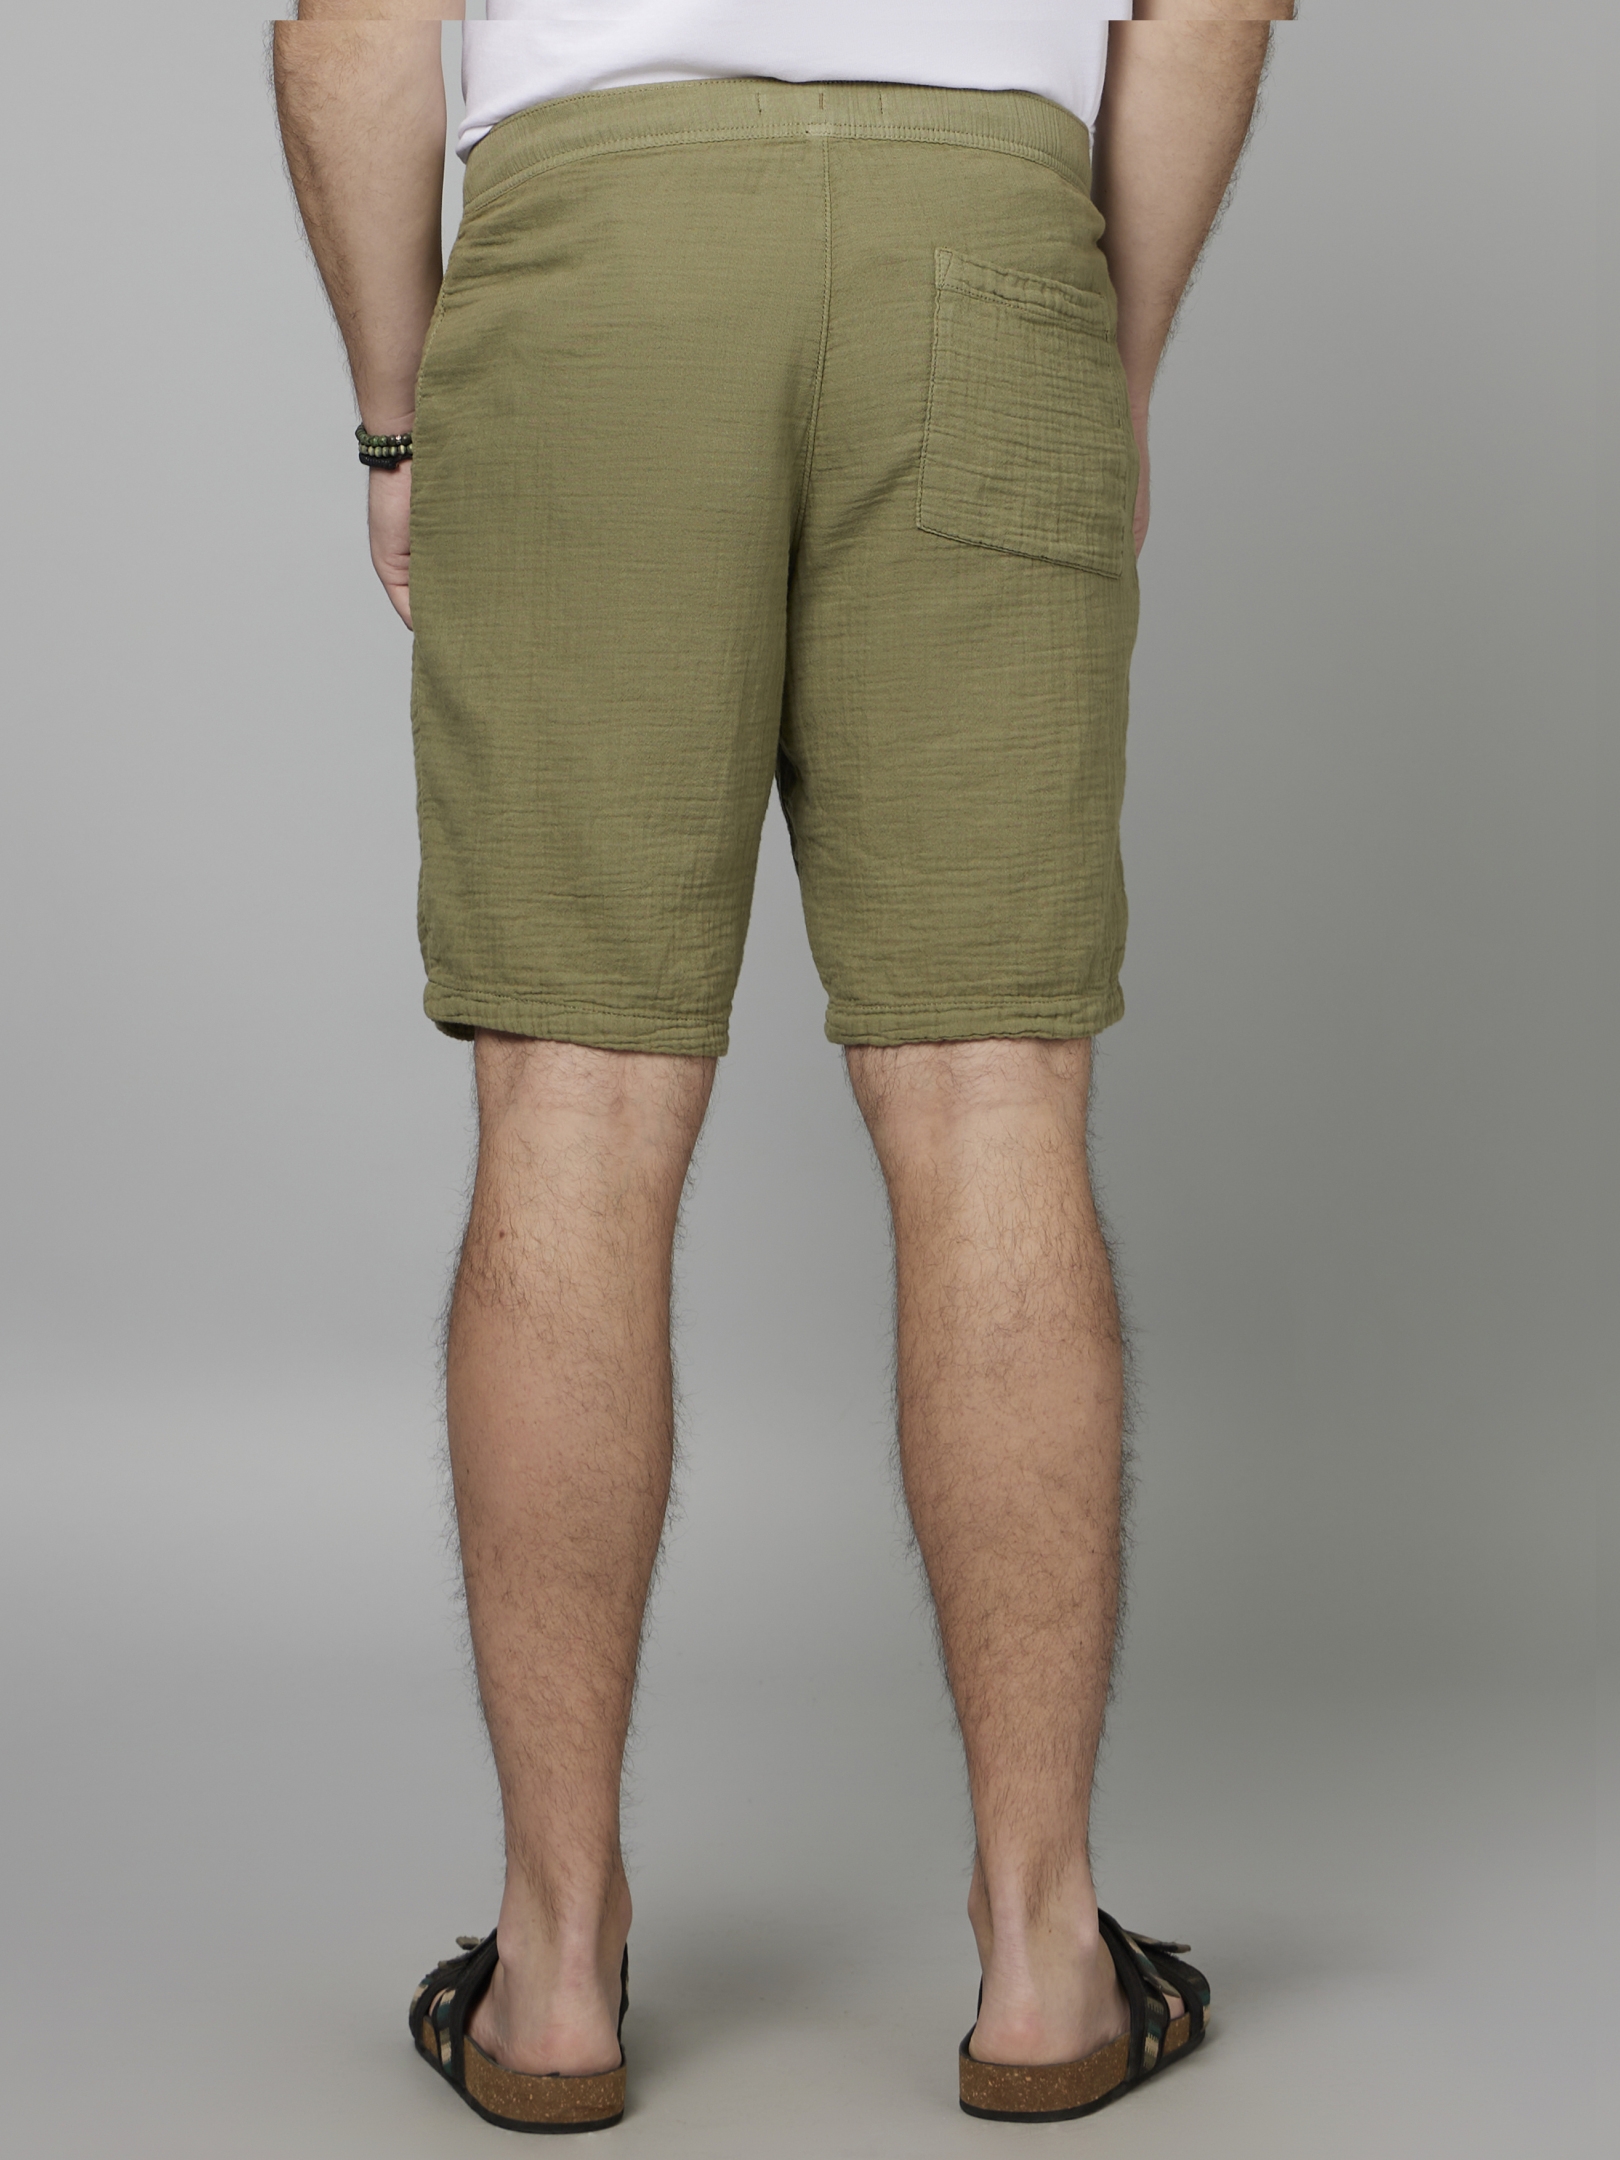 Dress Code: How to Wear Bermuda Shorts | Condé Nast Traveler